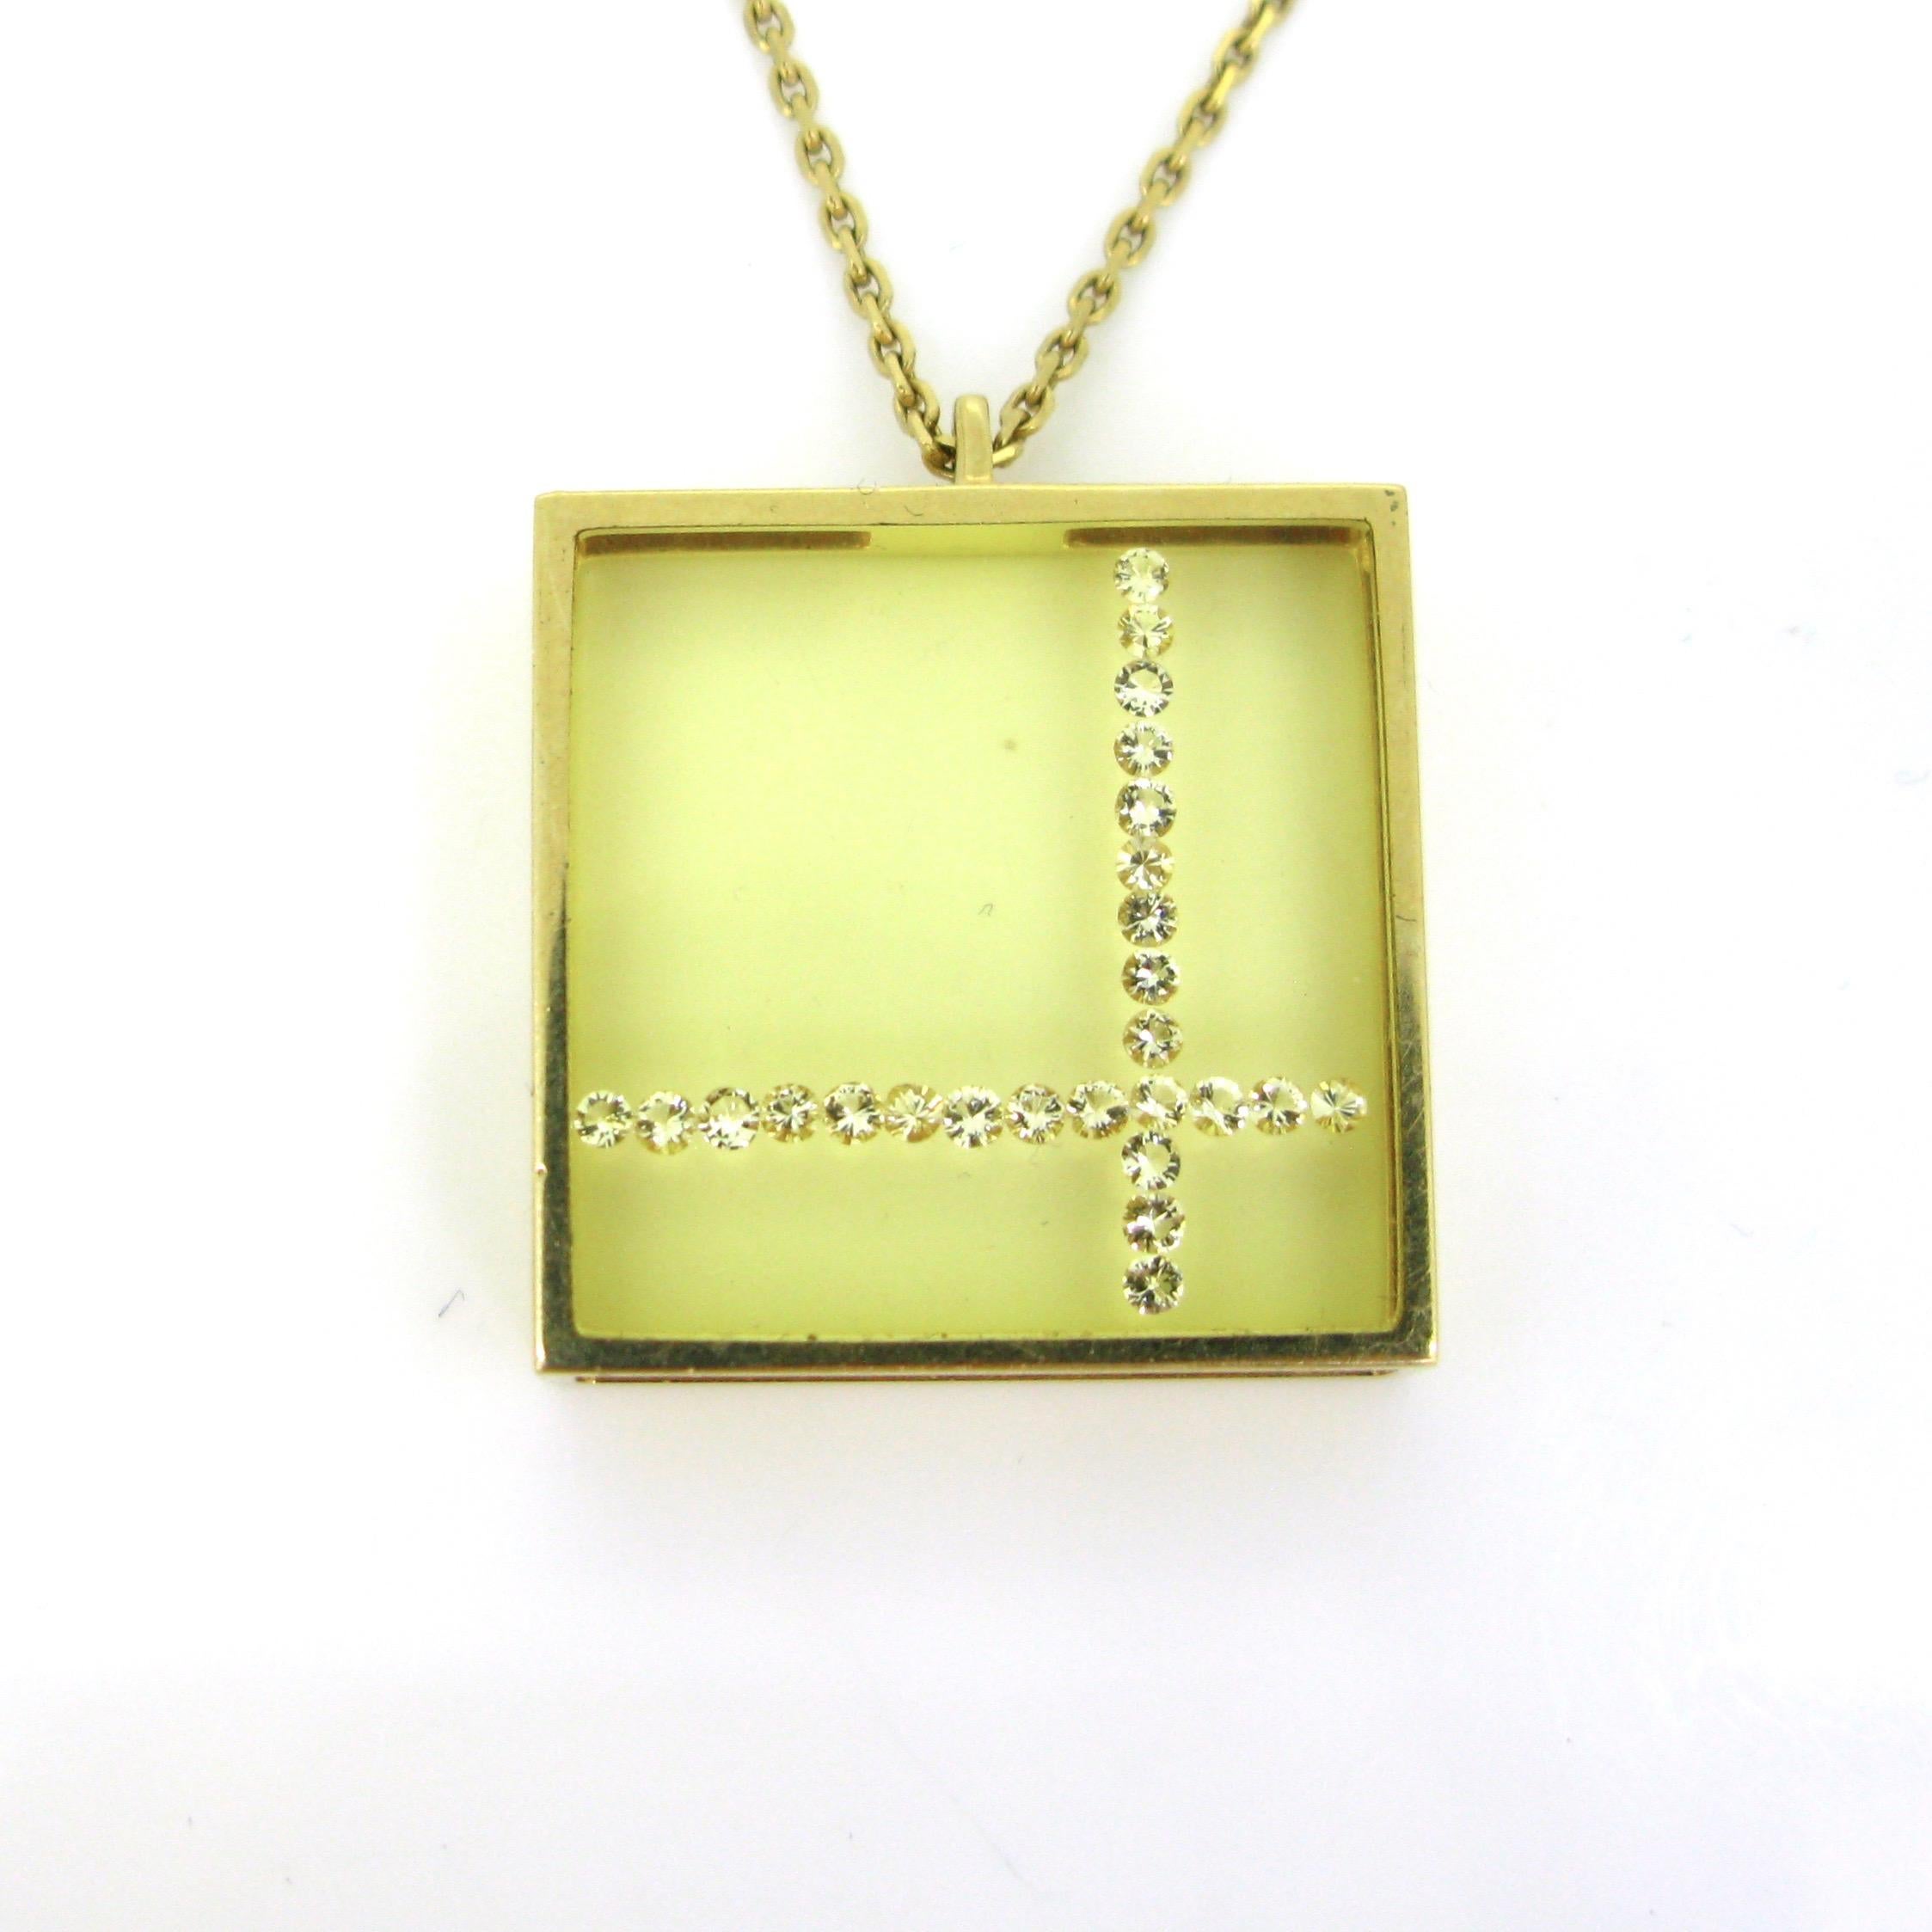 Women's or Men's Morabito Modernist Rectangular Diamonds Pendant on Chain, 18 Karat Gold, circ